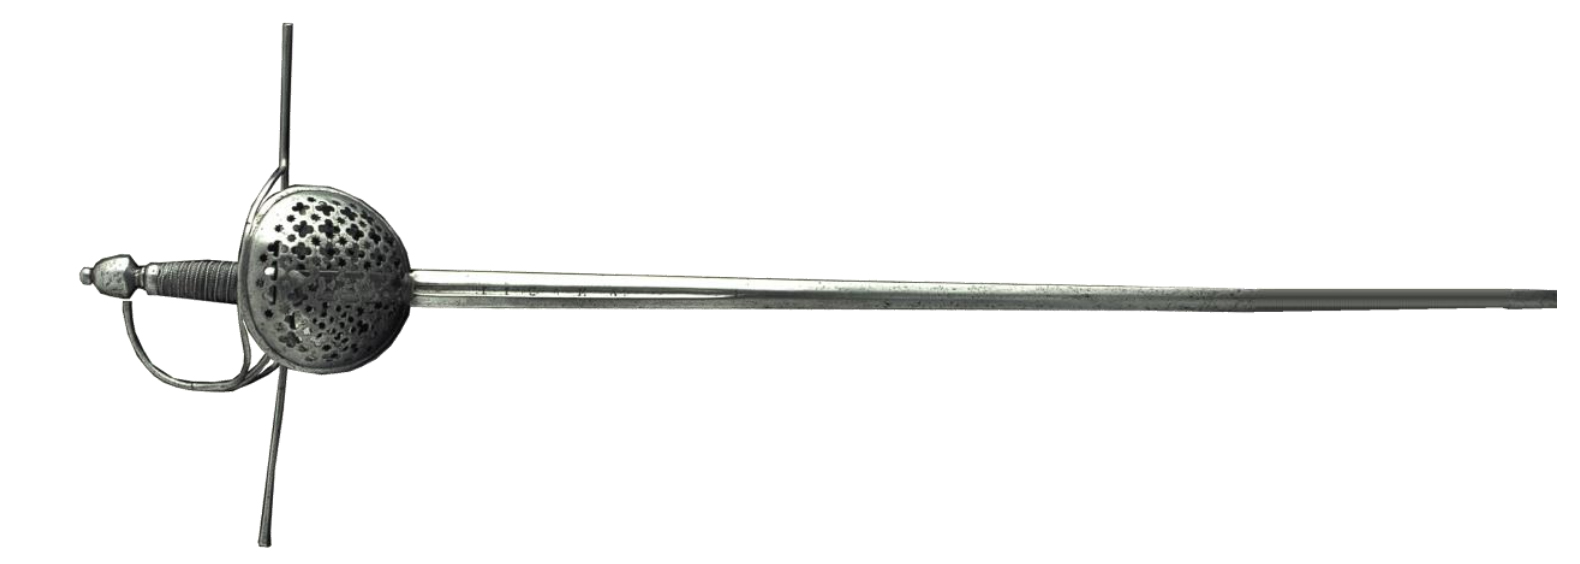 Espada de Conchas, Pedro de Lezama (siglo XVII)